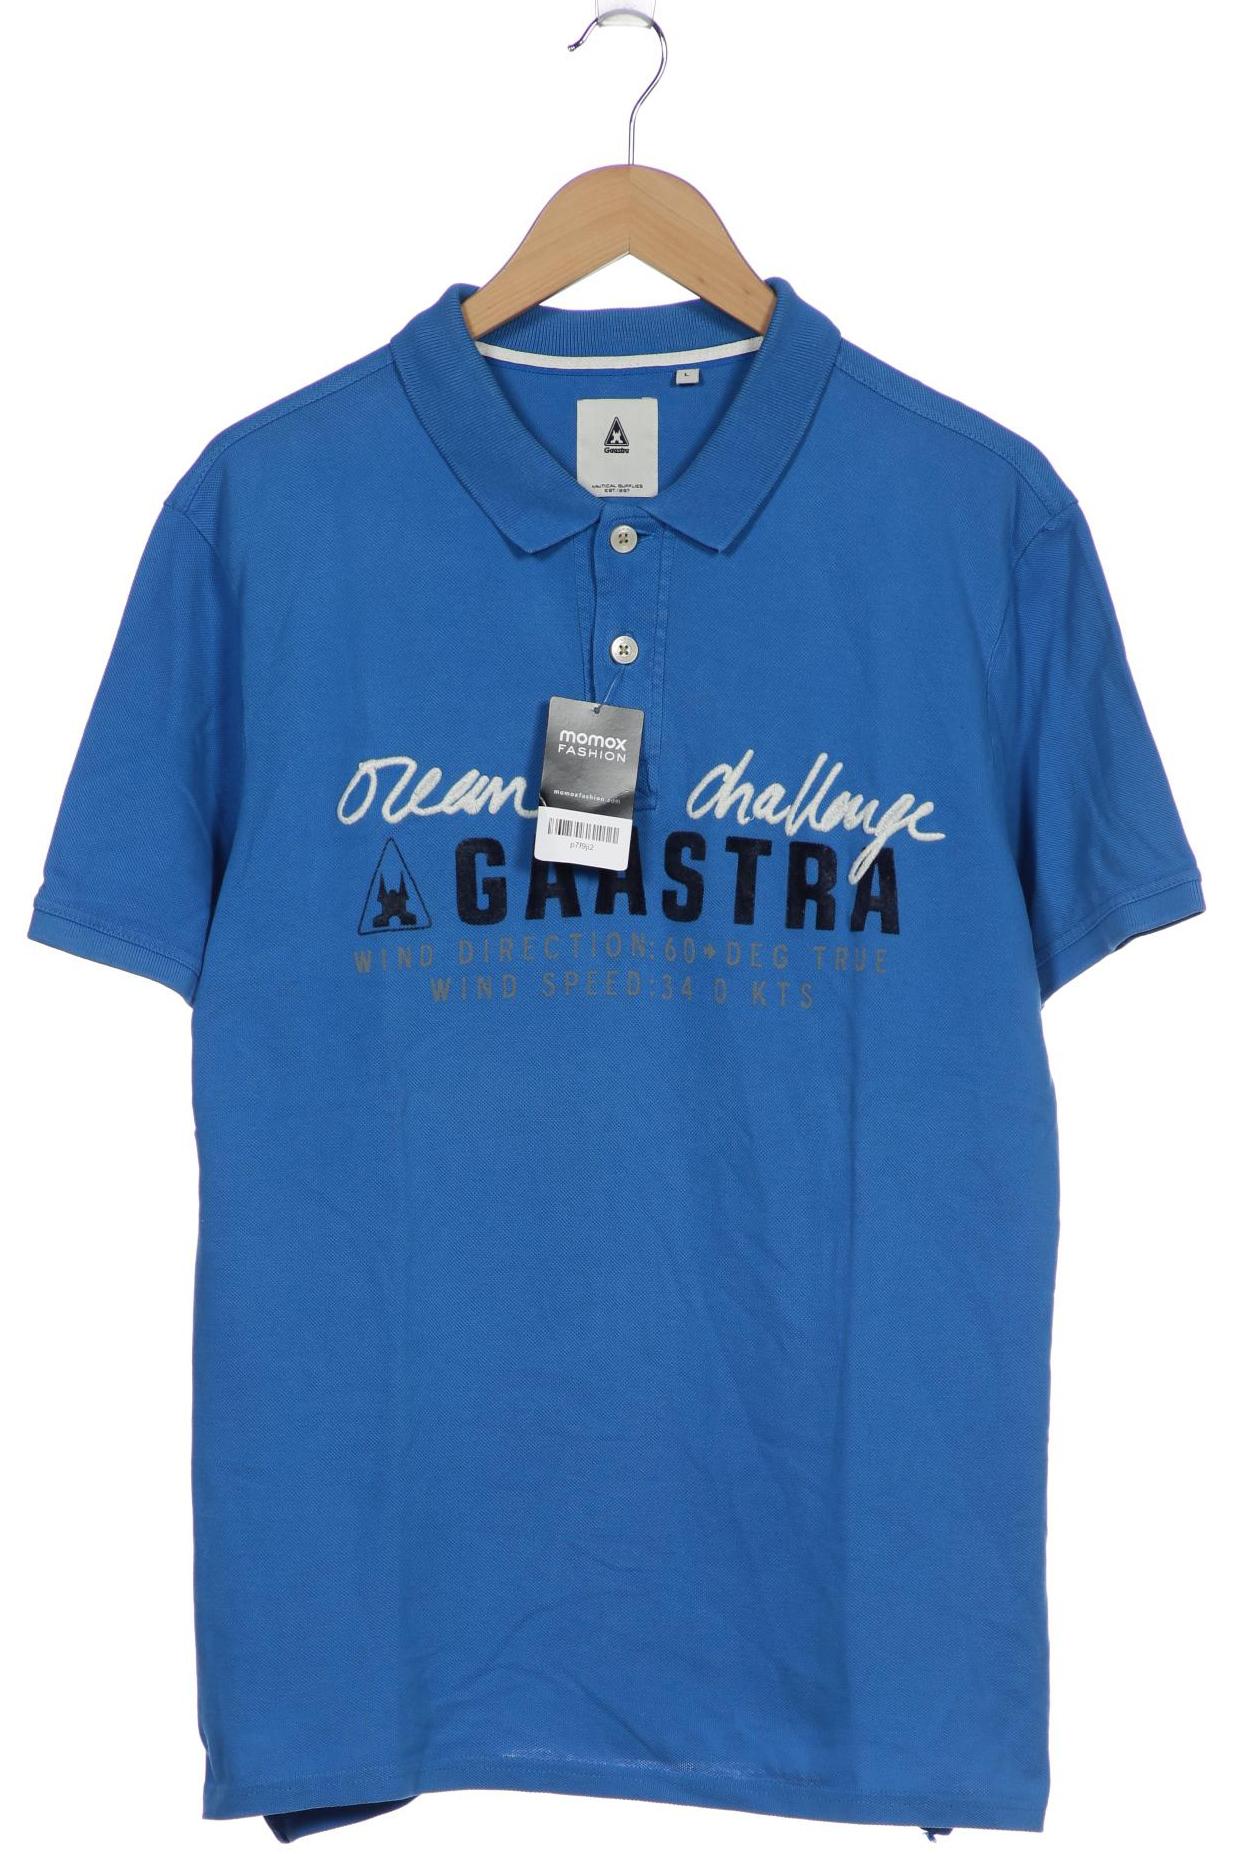 Gaastra Herren Poloshirt, blau, Gr. 52 von Gaastra